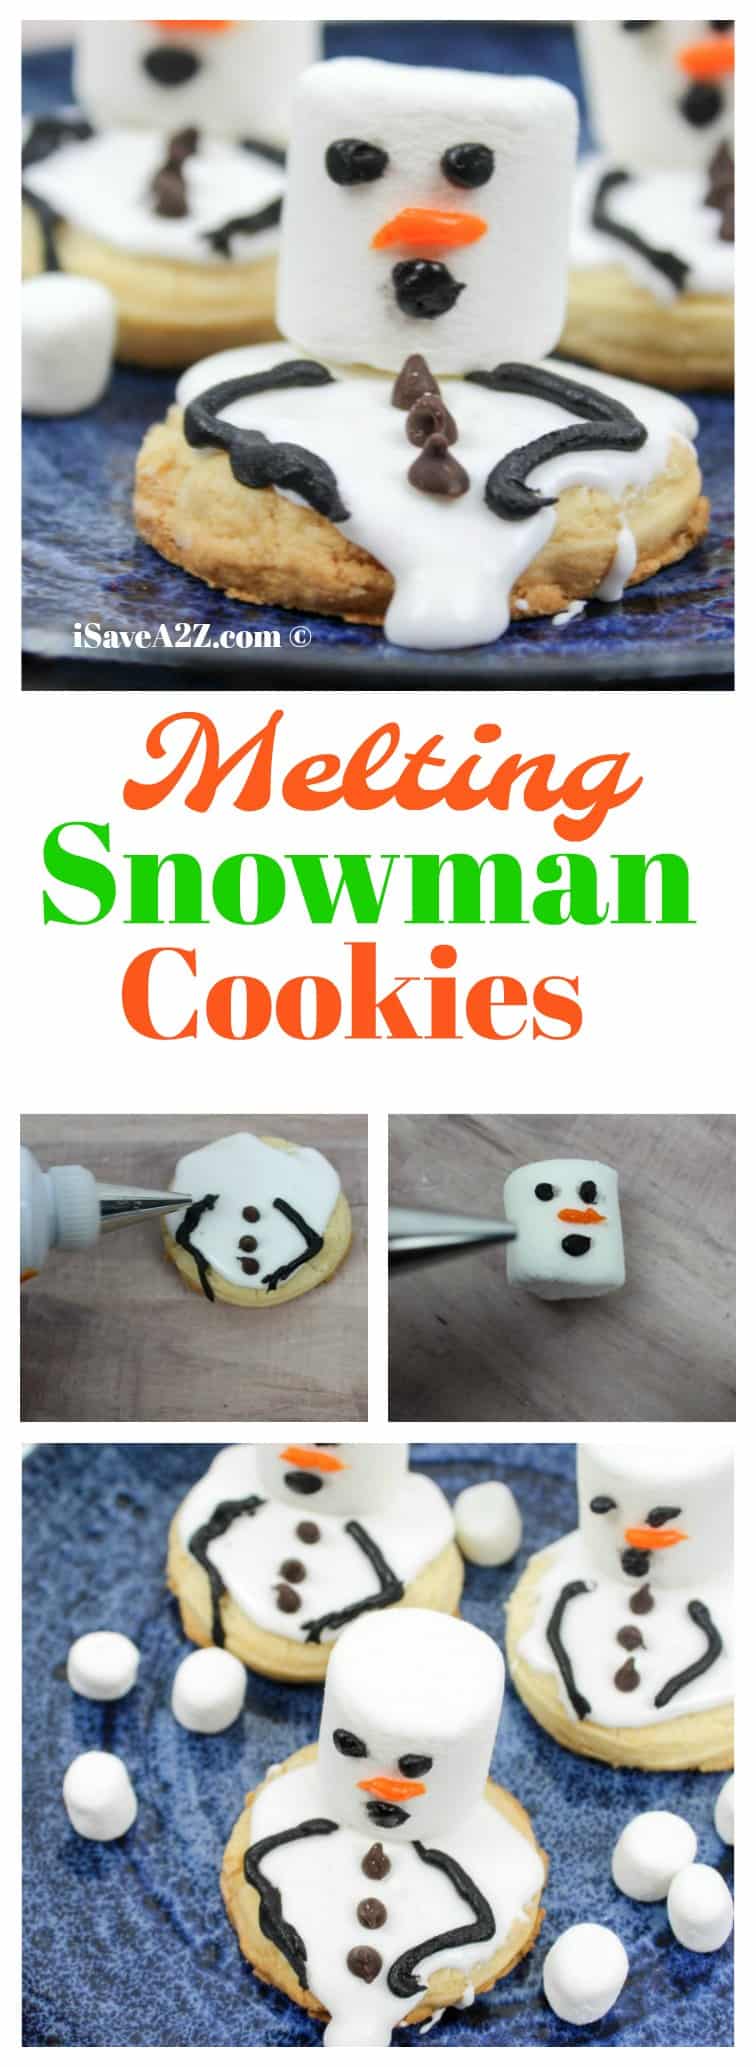 Melting Snowman Cookies Recipe